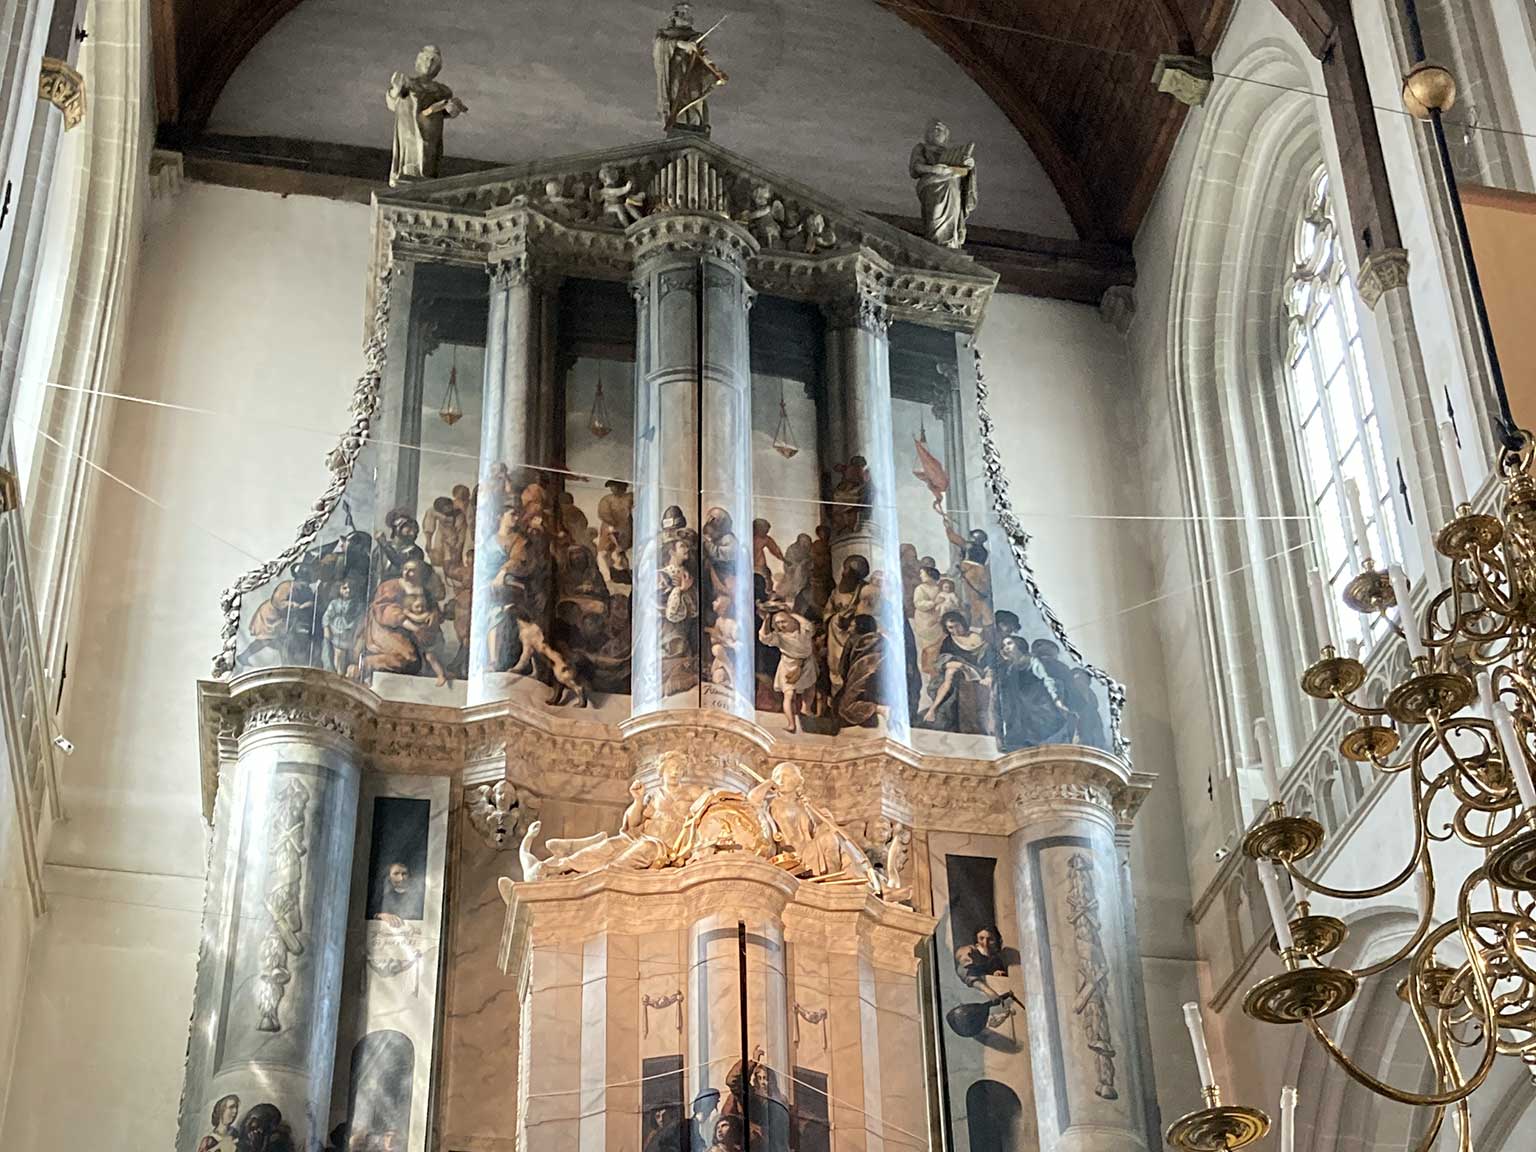 Top part of the main organ in the Nieuwe Kerk, Amsterdam